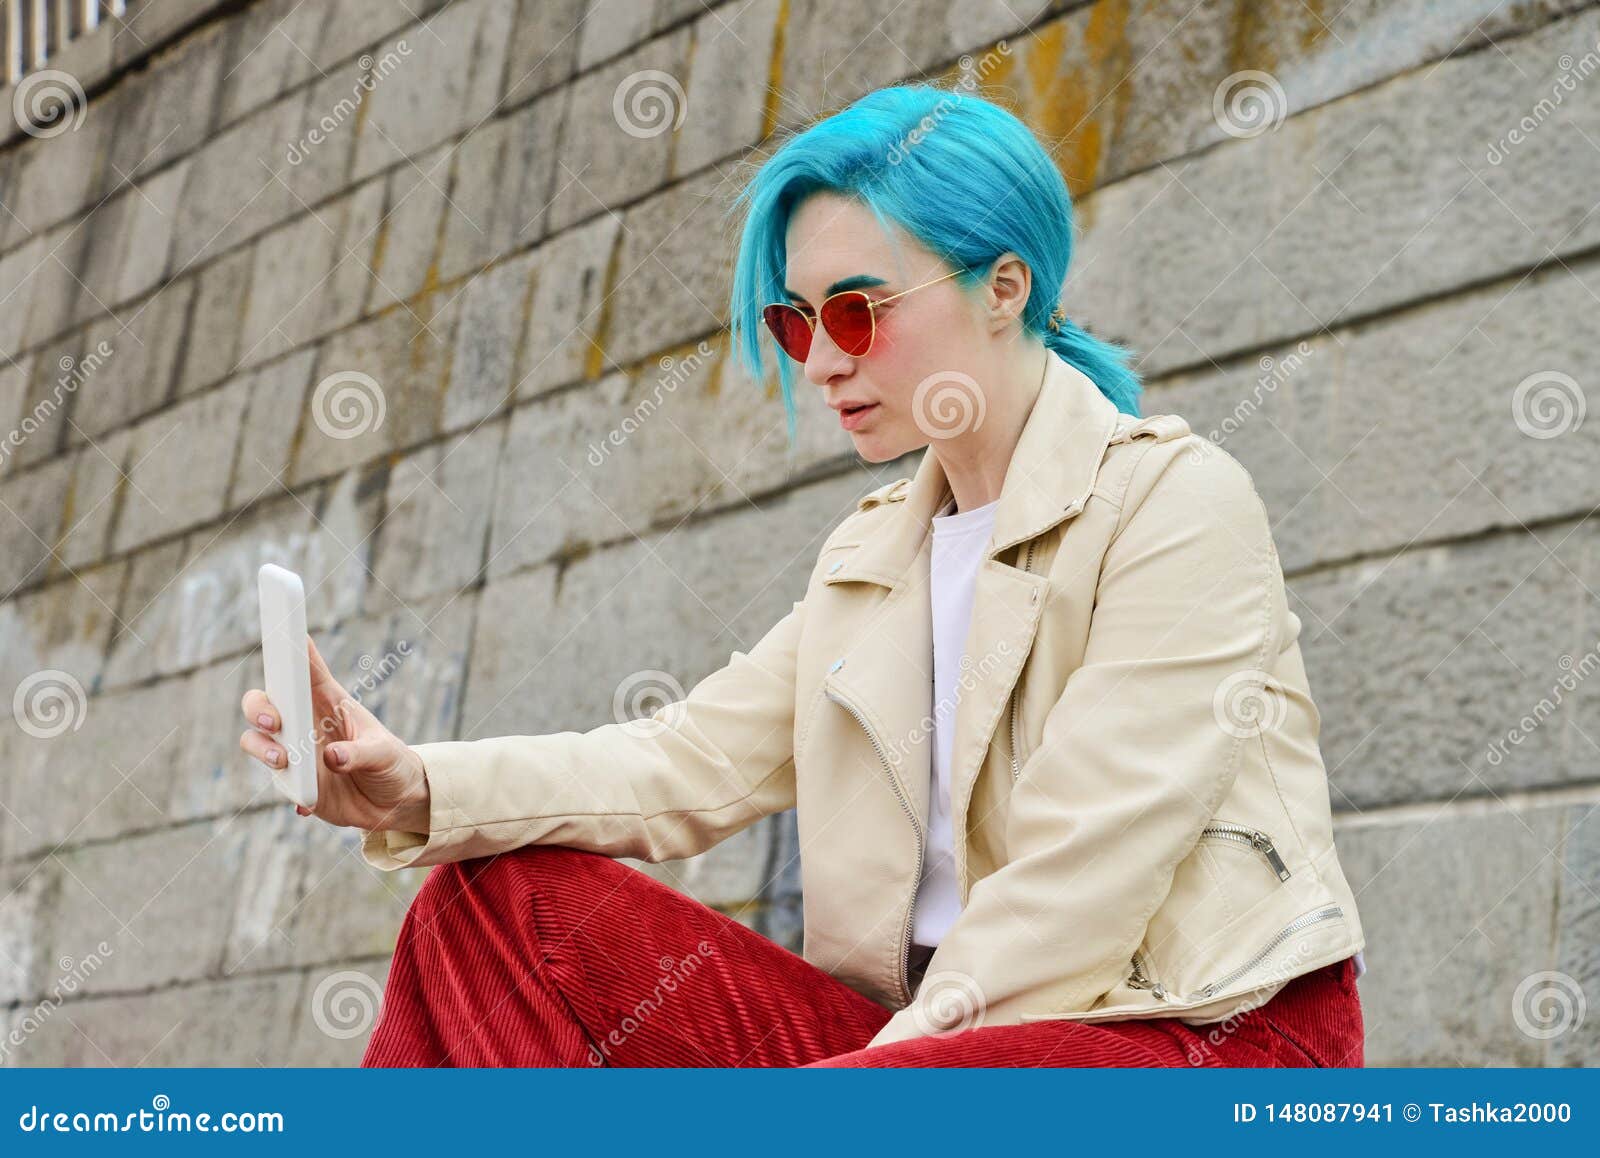 girl with blue hair selfie